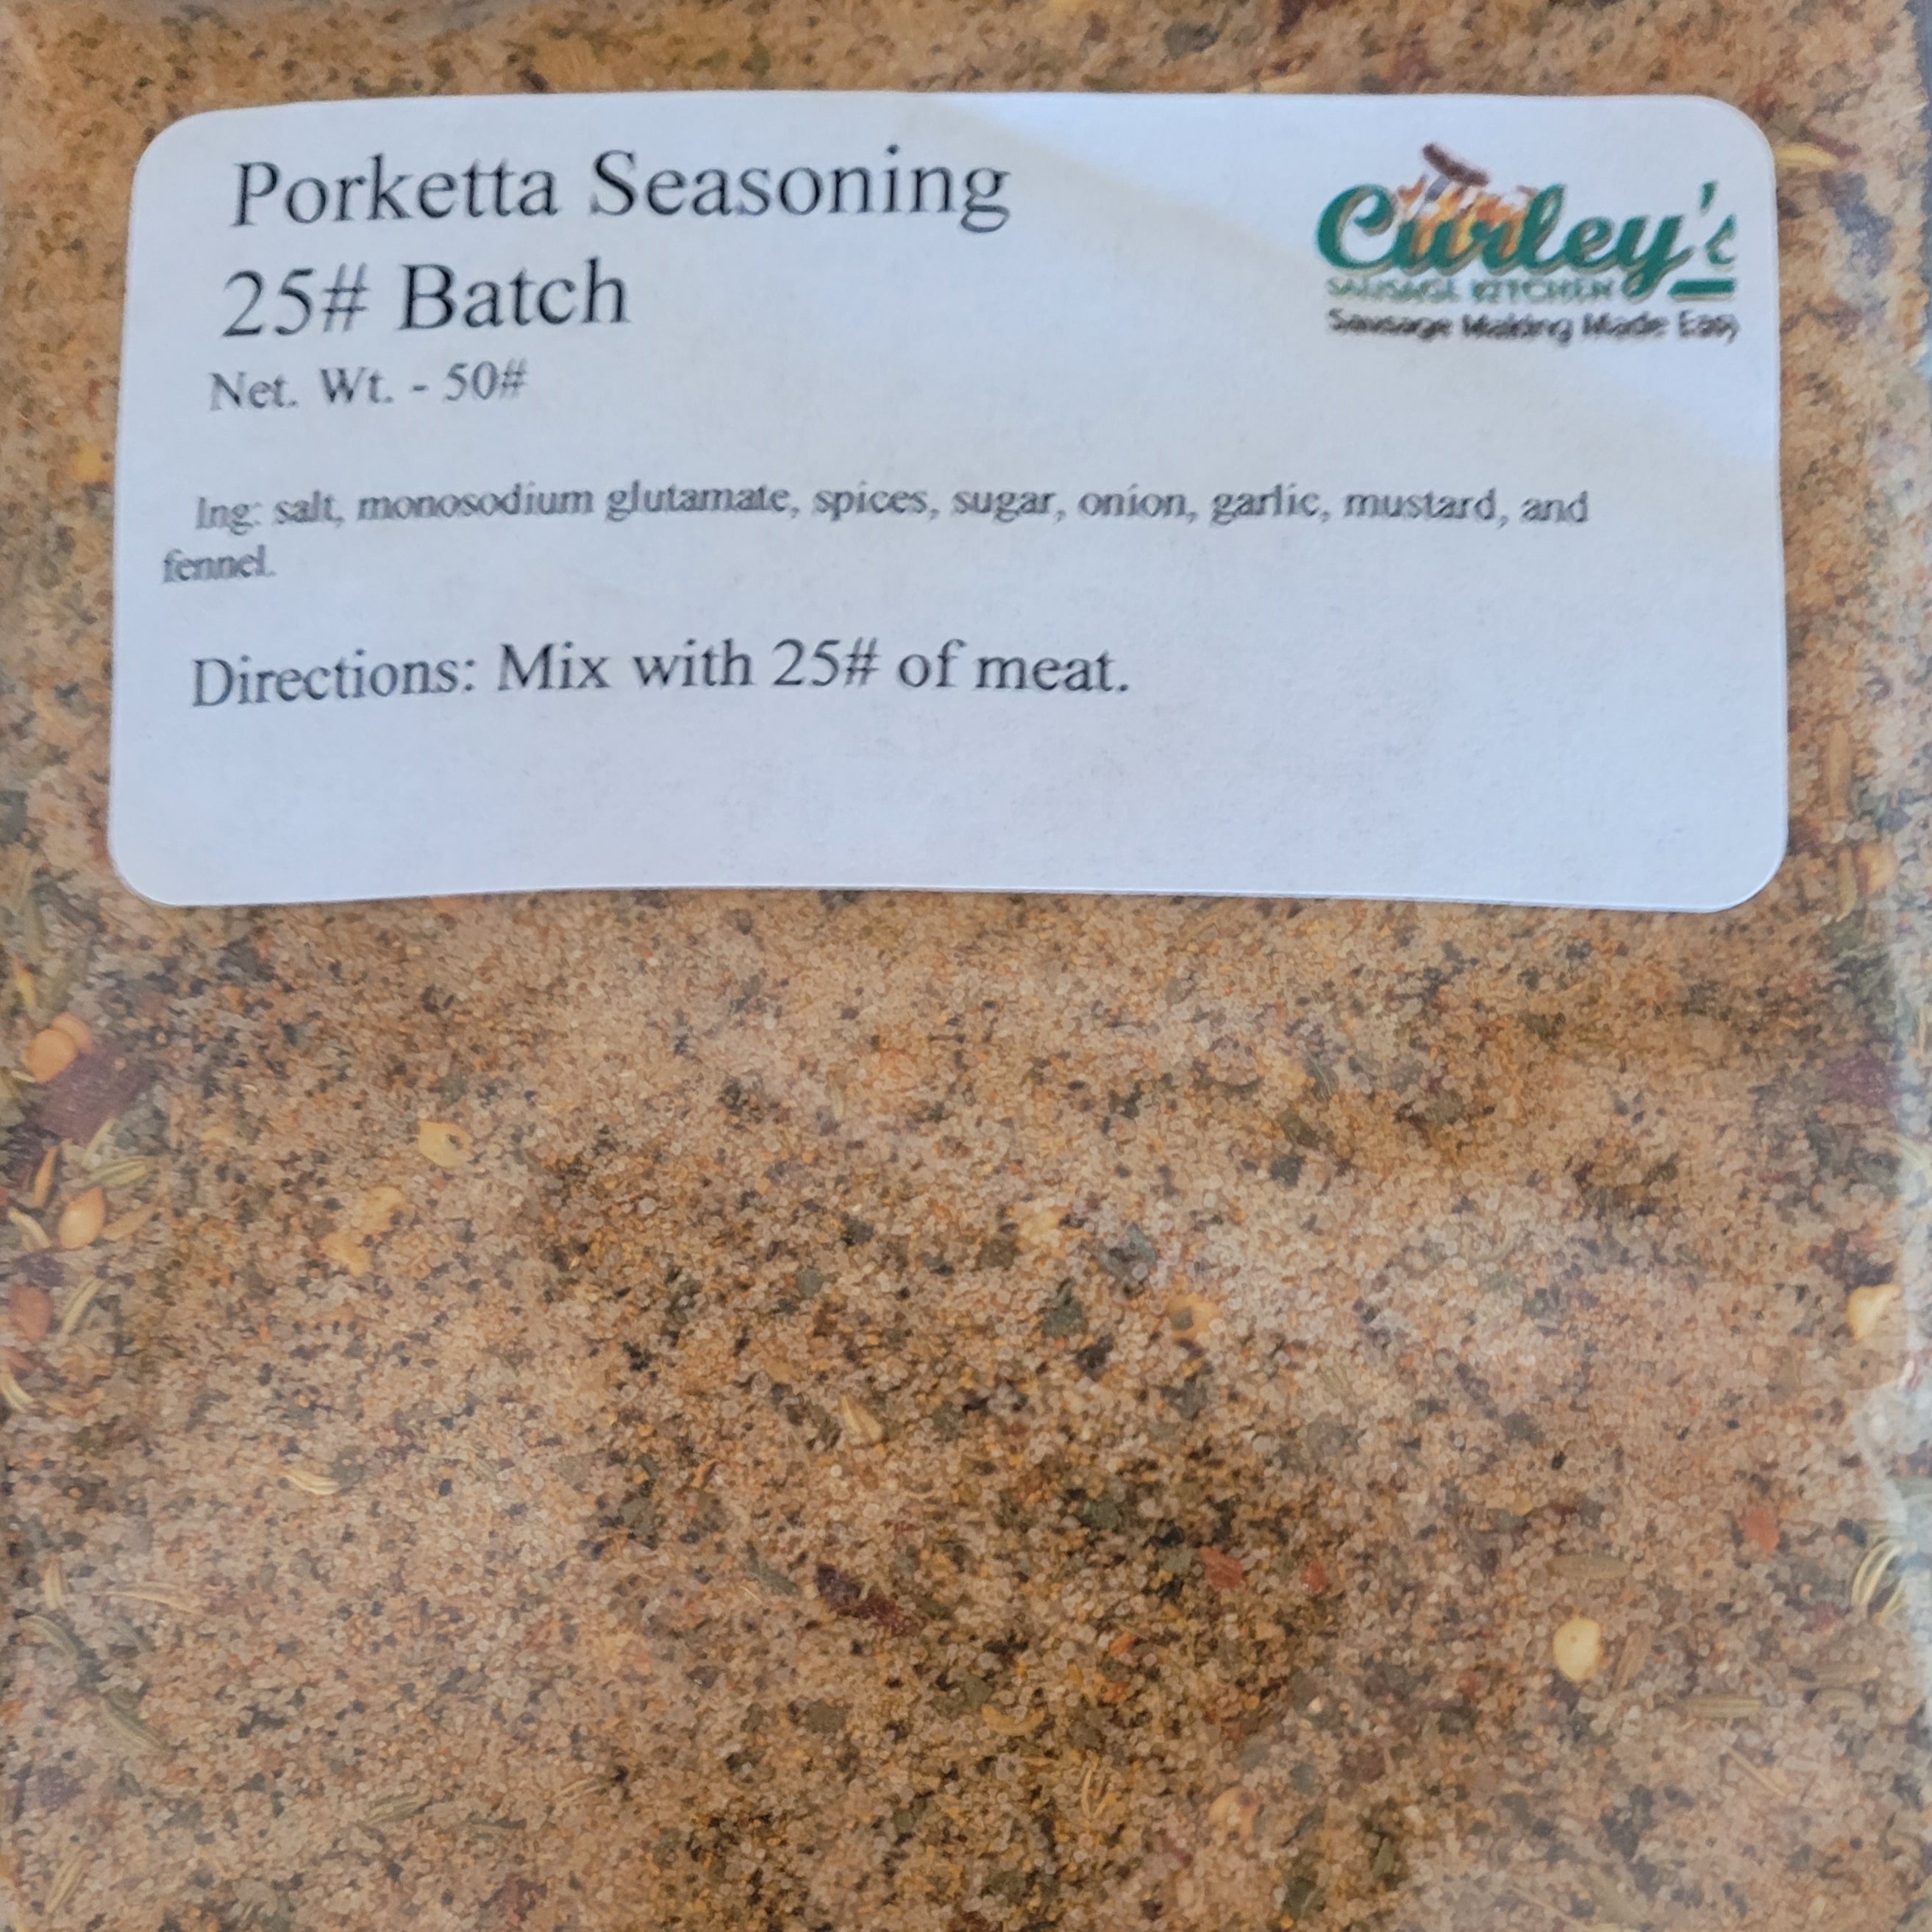 Porketta  Seasoning and casings